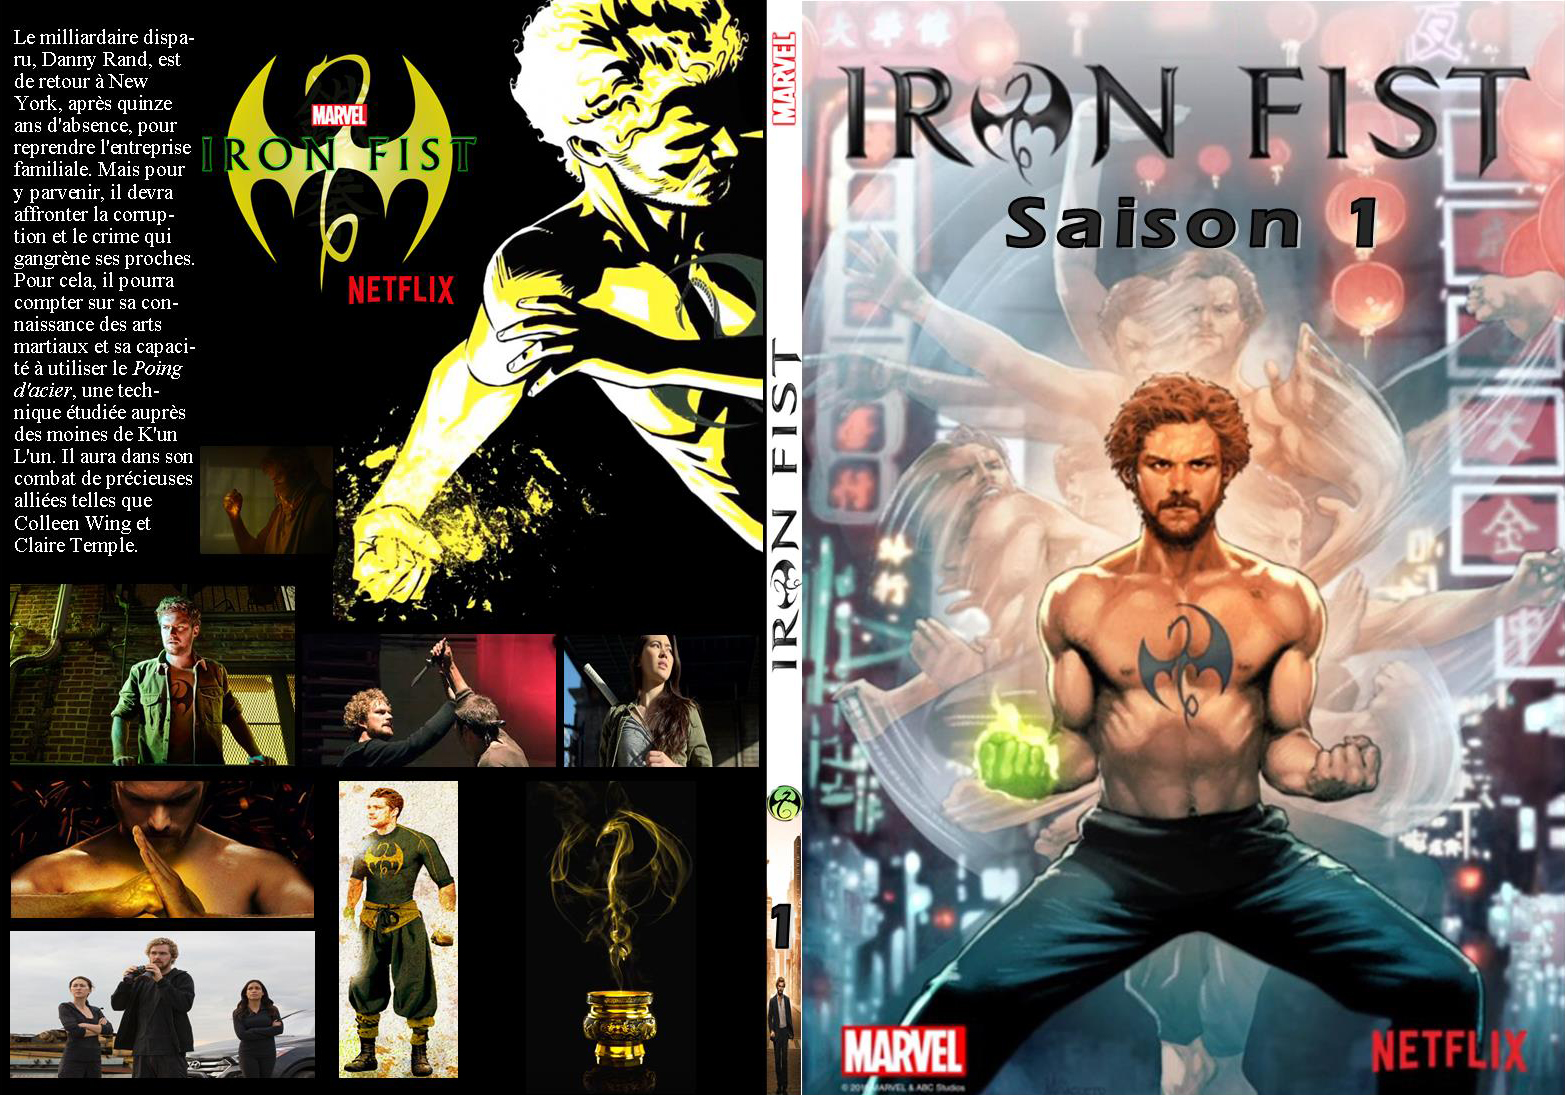 Jaquette DVD Iron Fist saison 1 custom v2